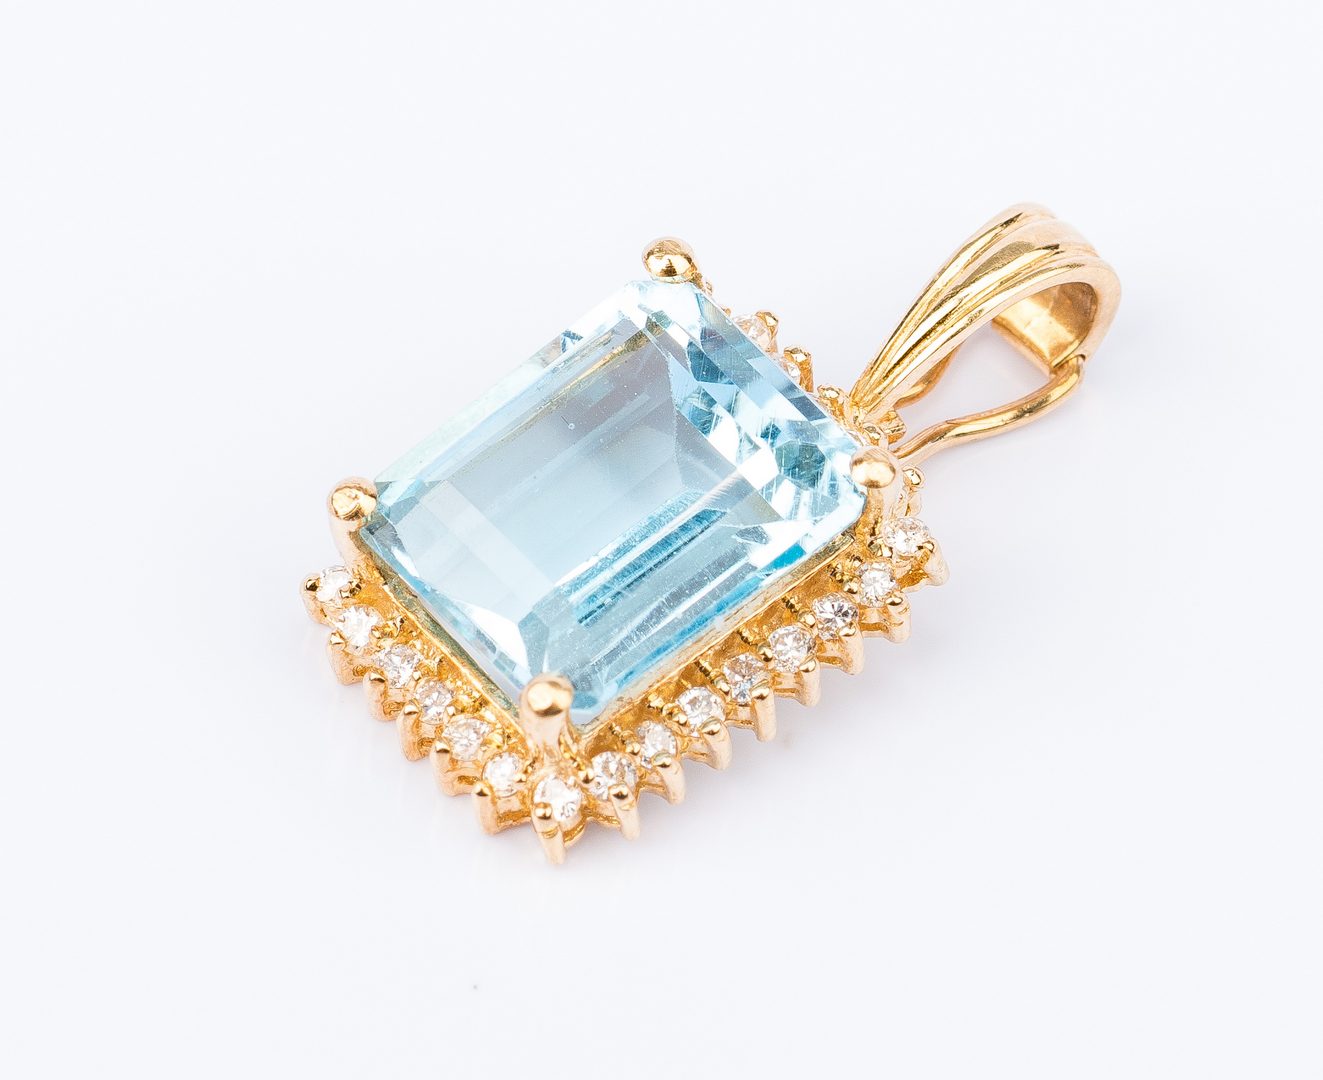 Lot 29: 4 items Ladies Gold, Diamond Jewelry